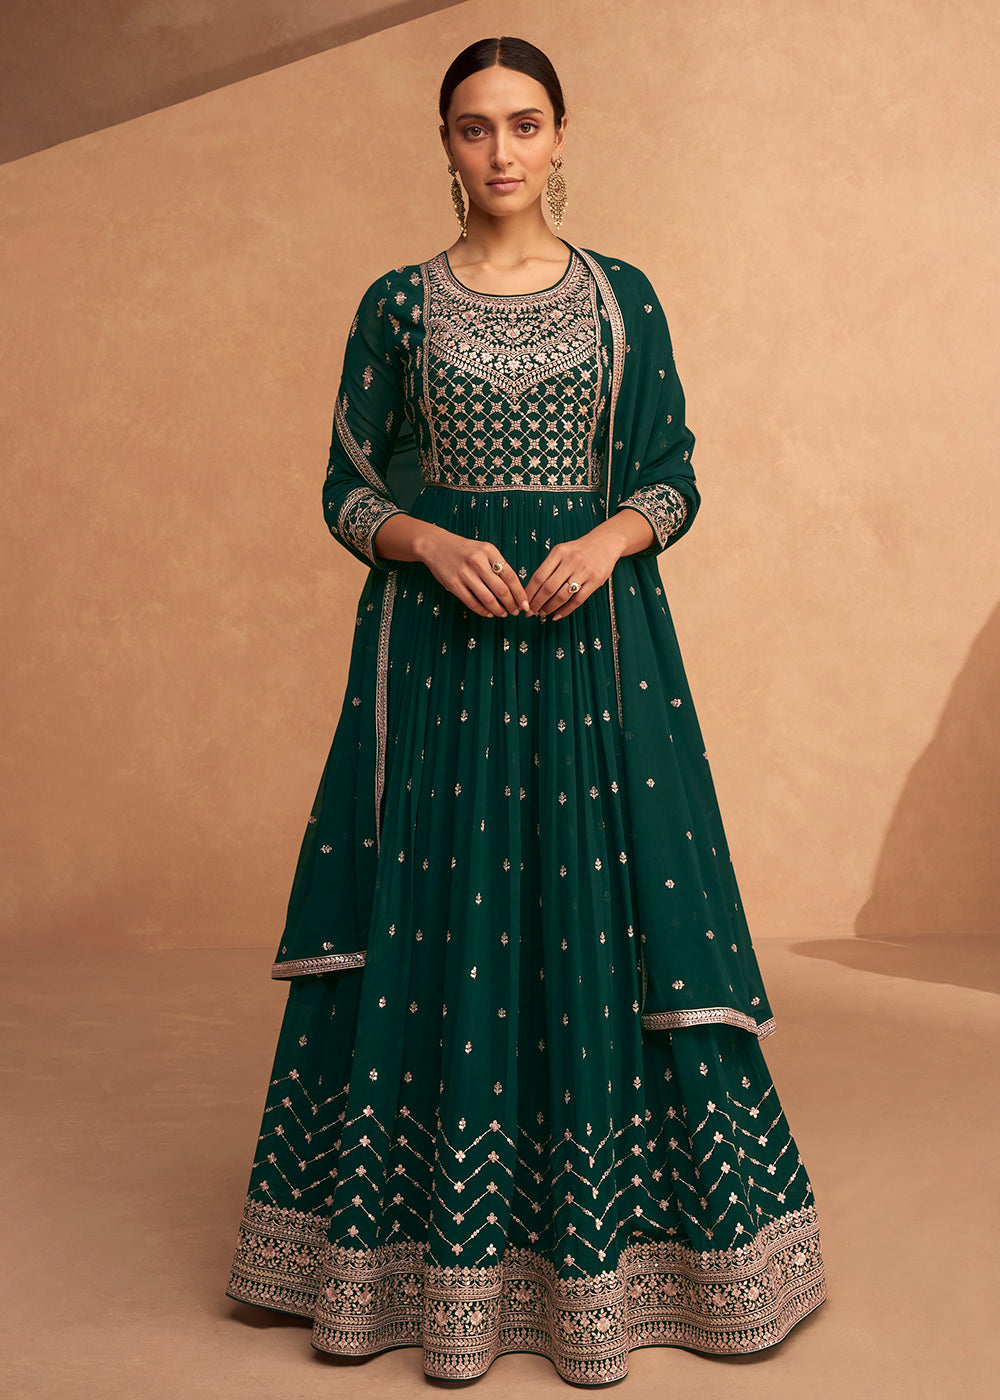 Buy Now Stunning Dark Green Georgette Wedding Festive Anarkali Online in USA, UK, Australia, New Zealand, Canada & Worldwide at Empress Clothing.